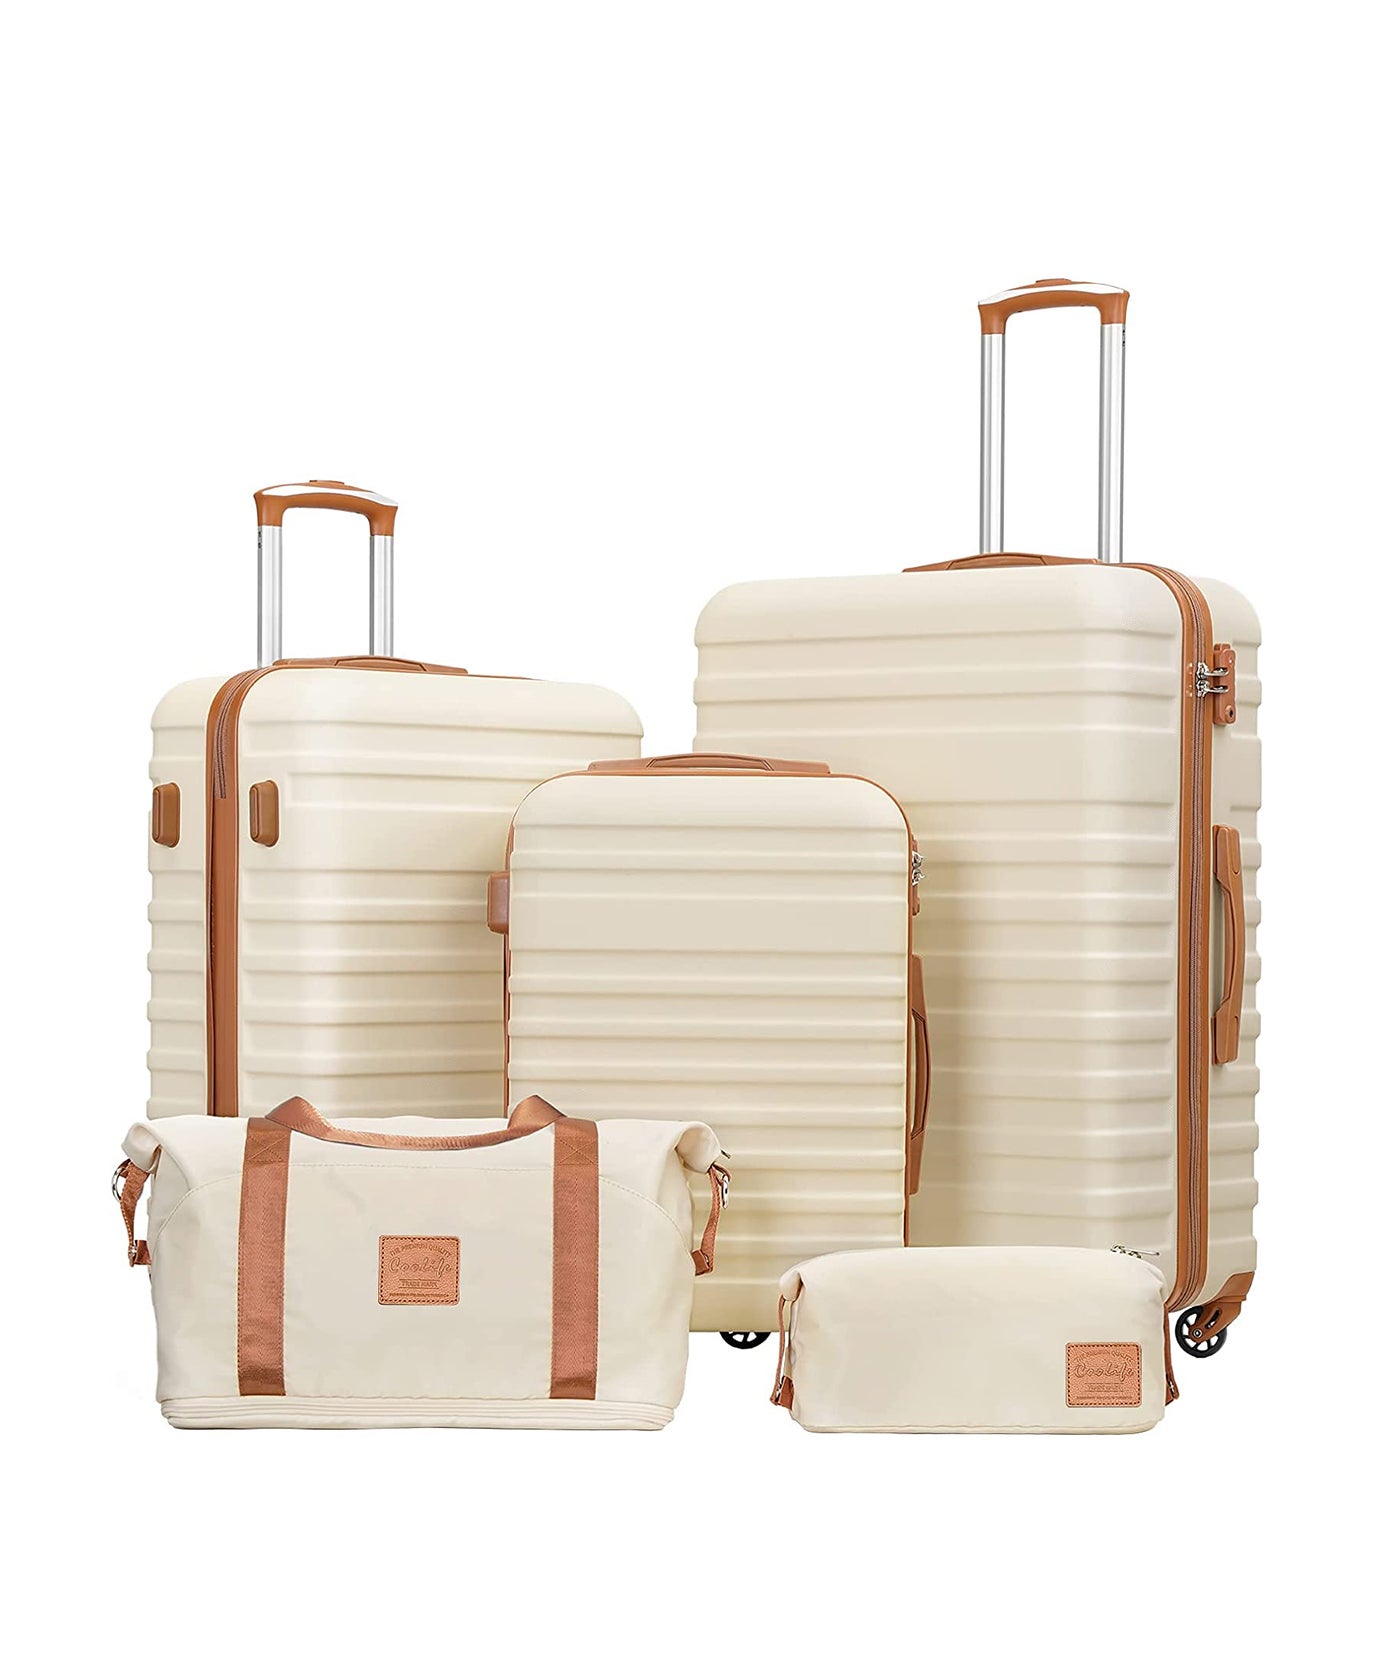 11 Designer Luggage Sets to Jet-Set In Style